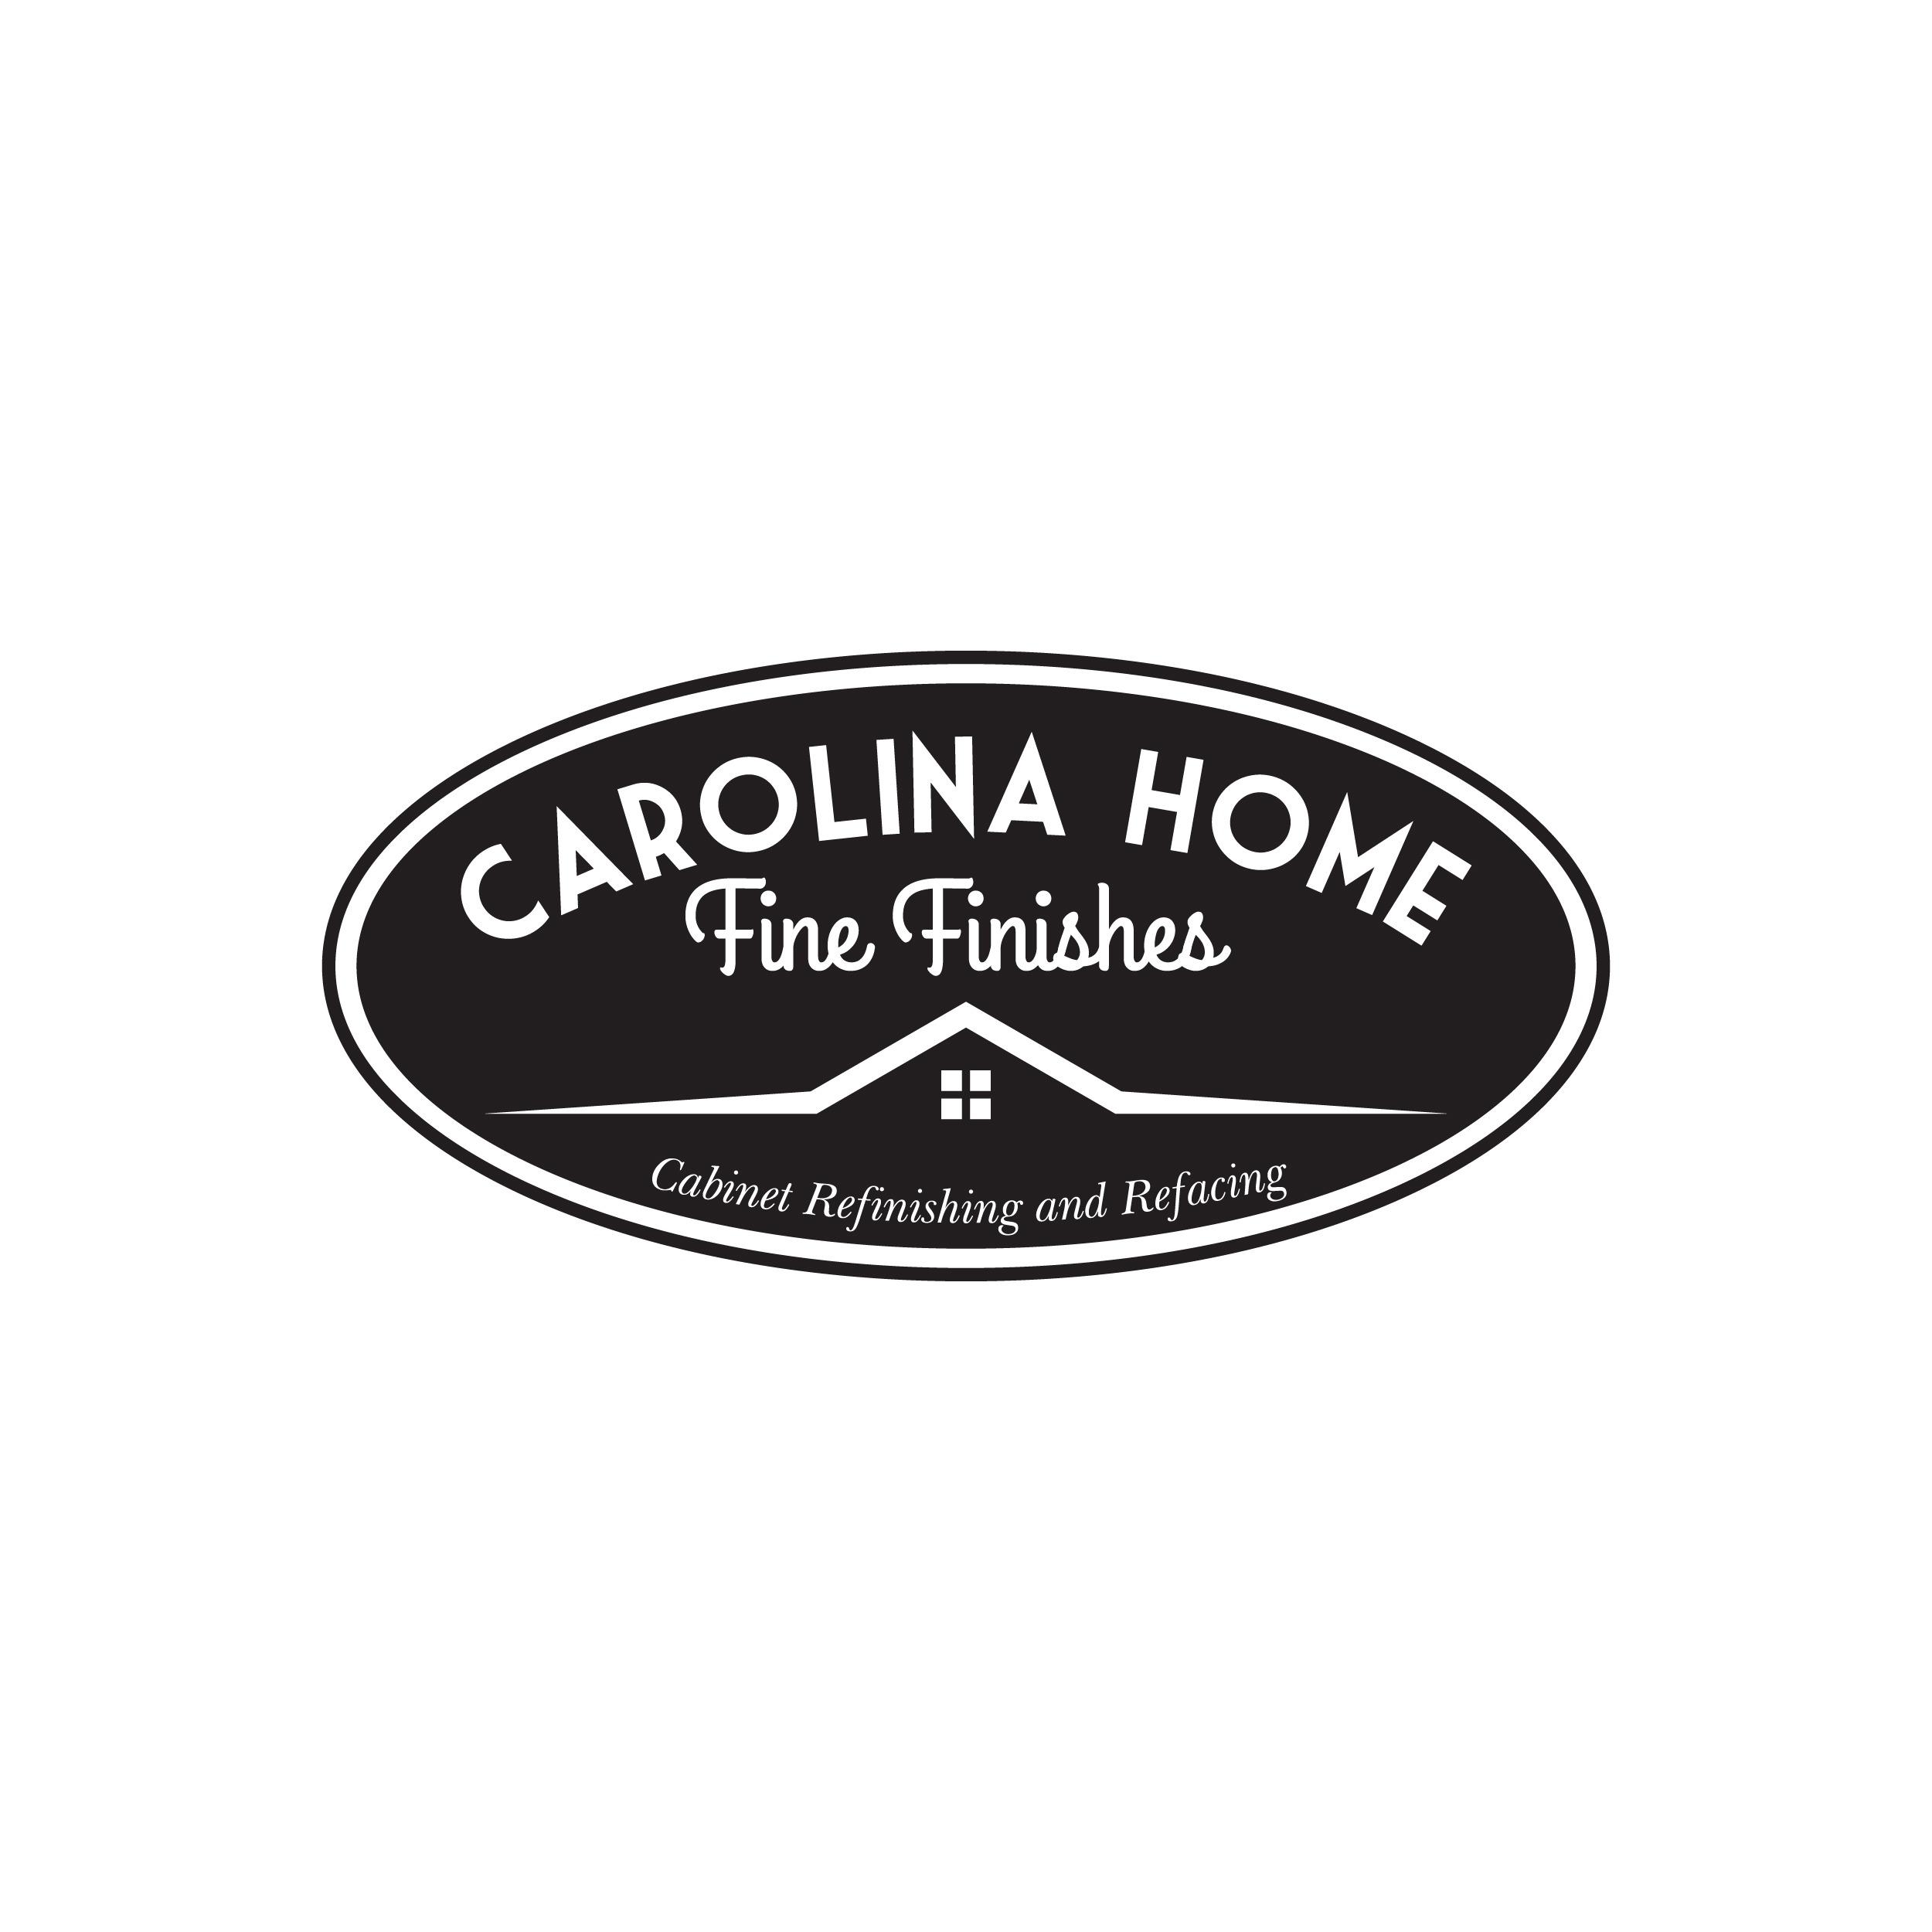 Carolina Home Fine Finishes - Stallings, NC 28104 - (704)995-6931 | ShowMeLocal.com